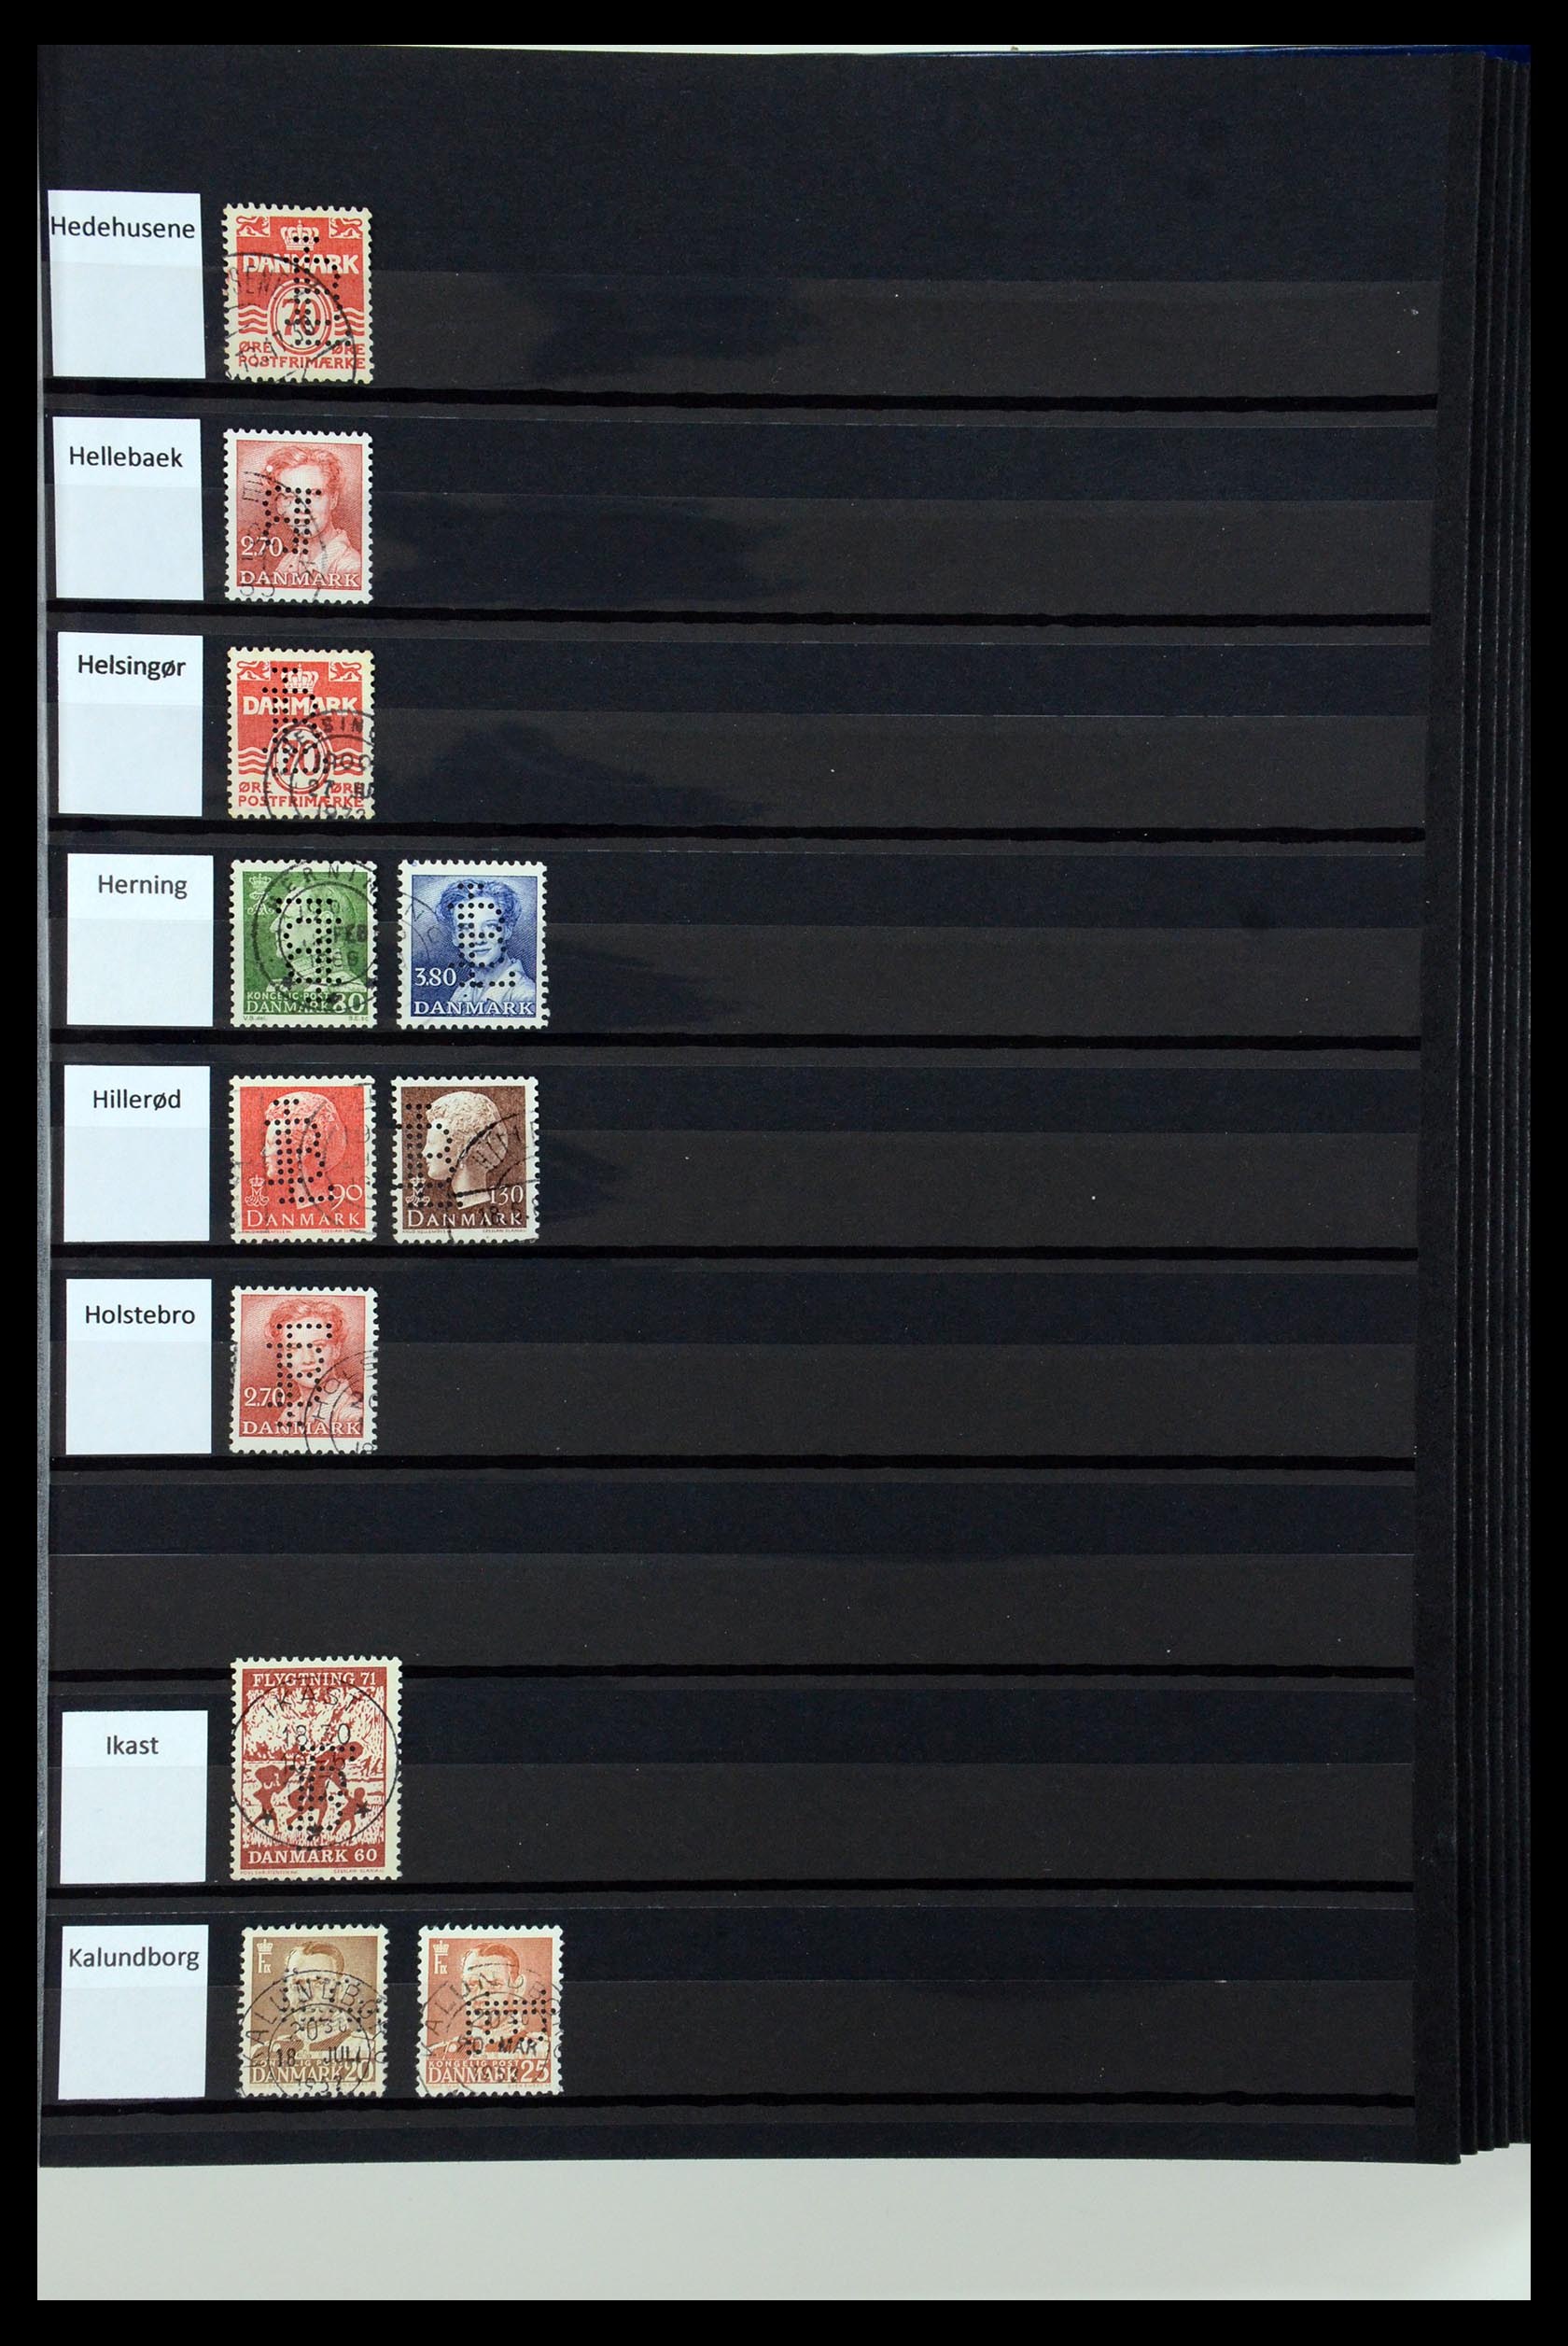 36396 090 - Stamp collection 36396 Denmark perfins.